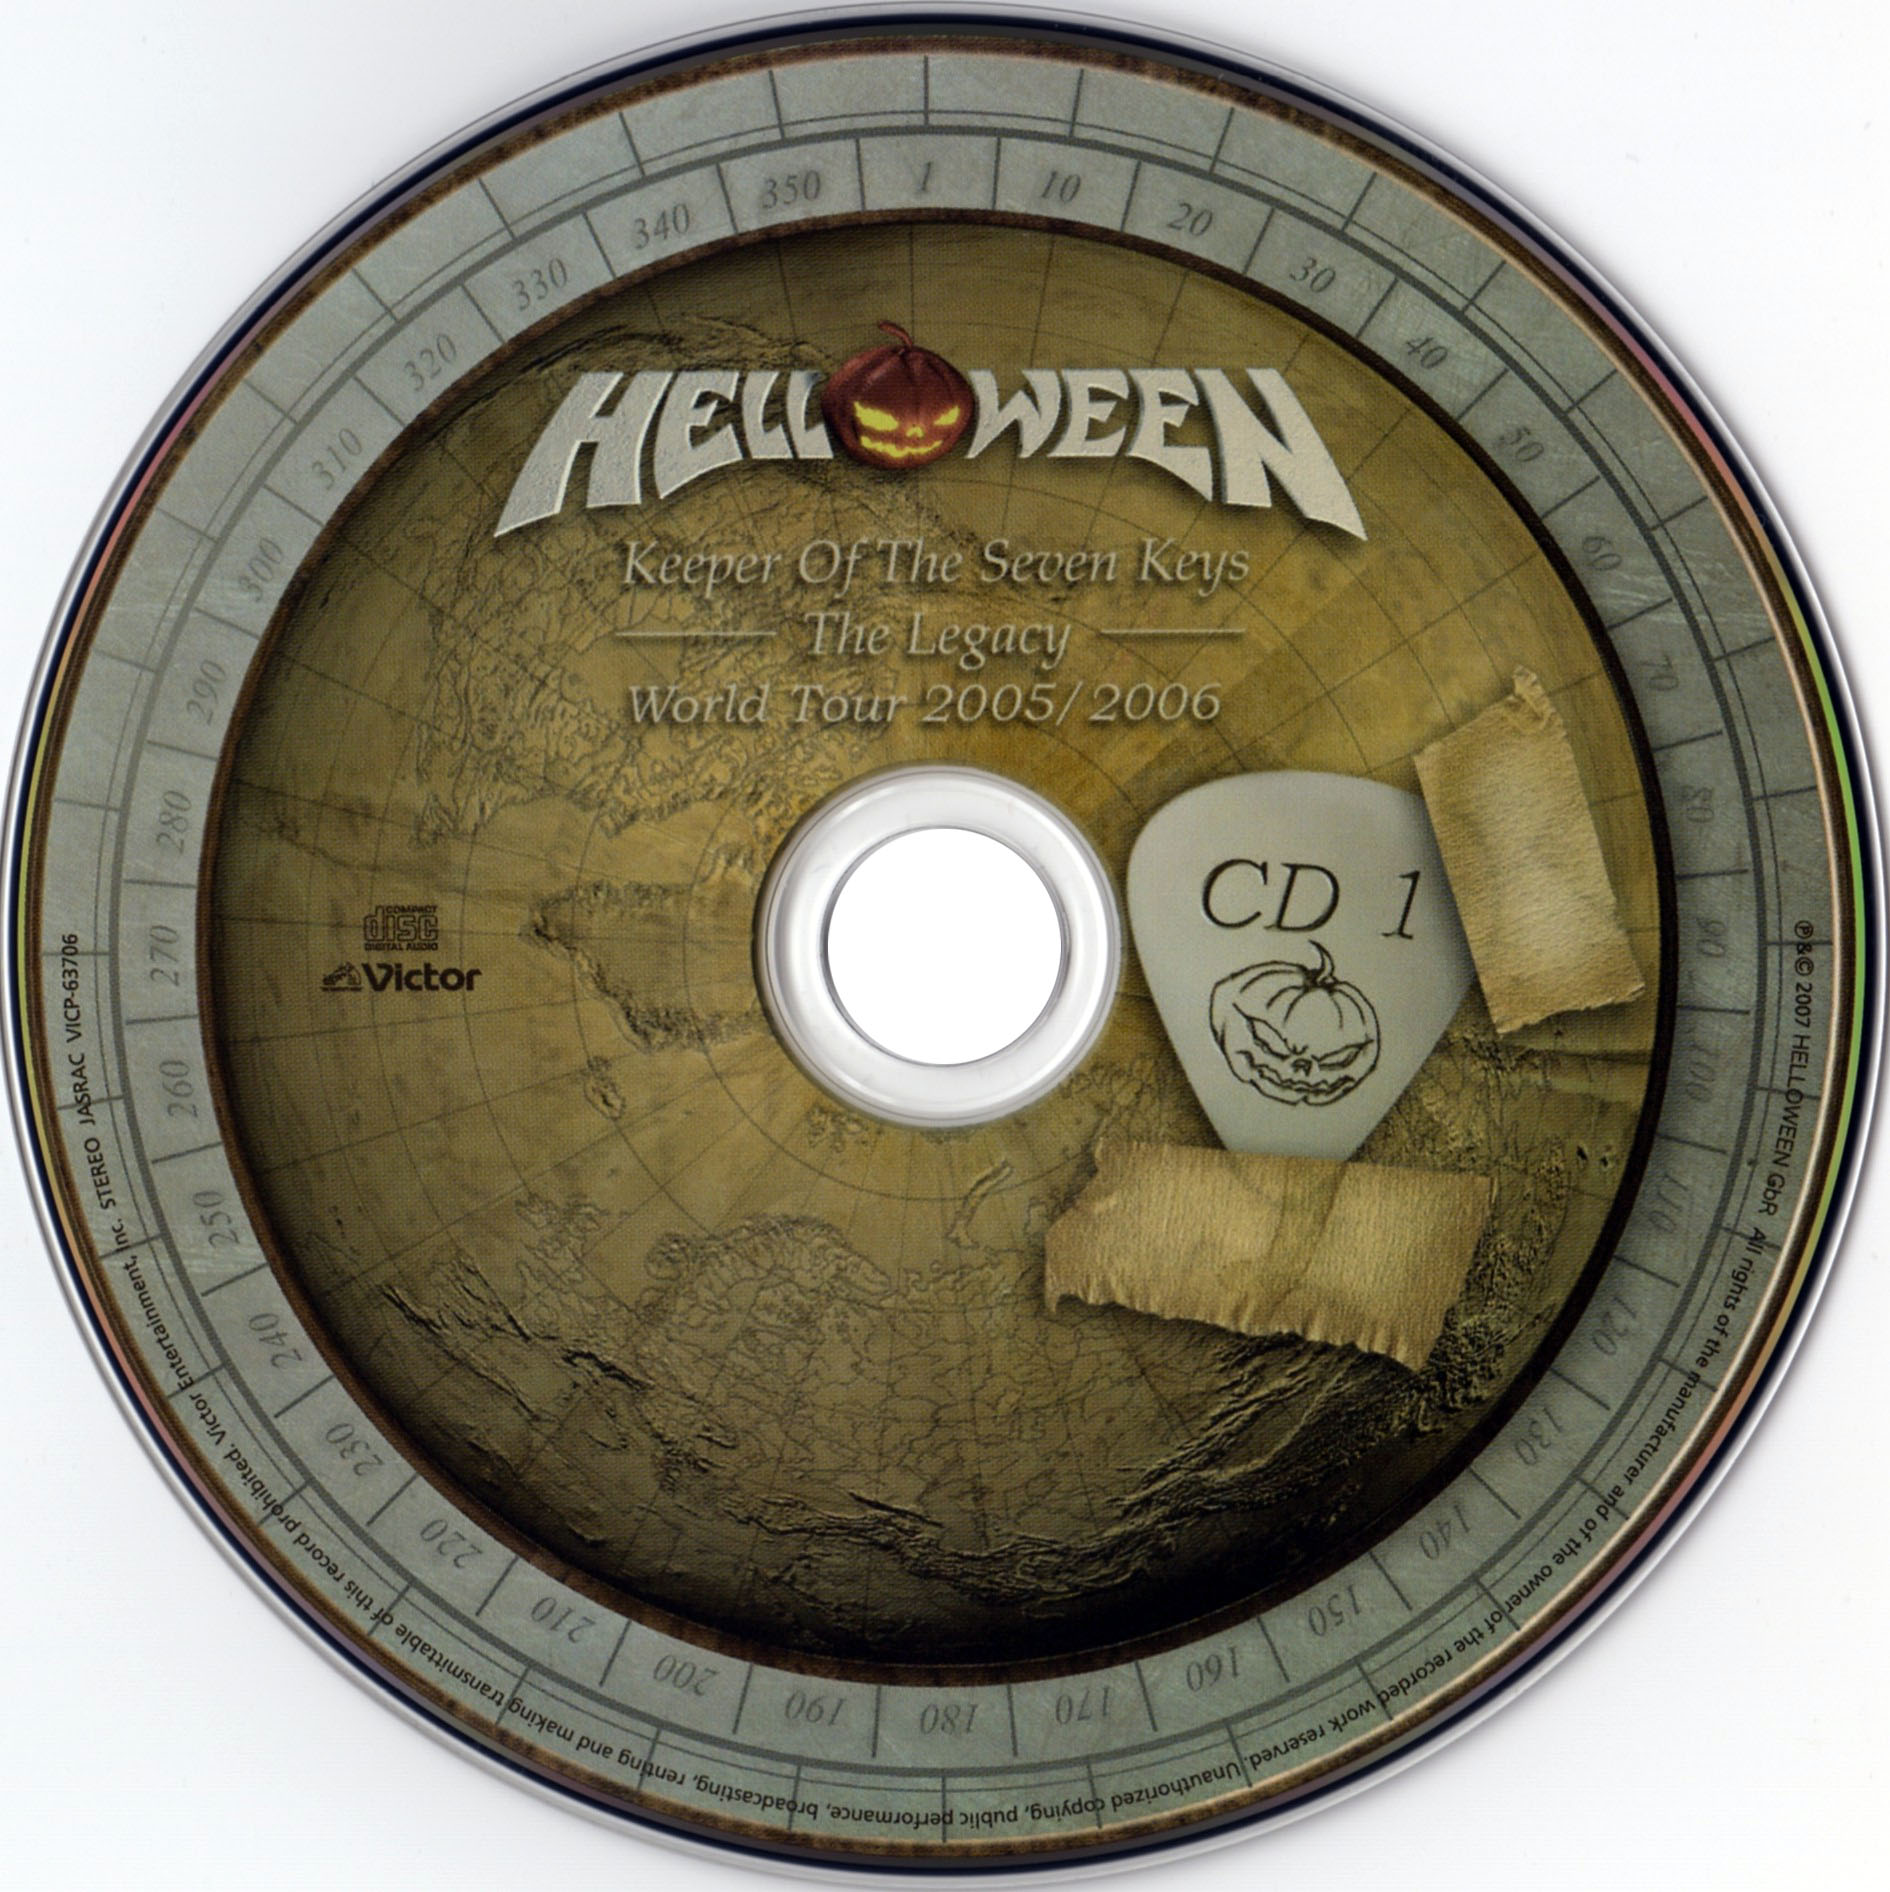 Cartula Cd1 de Helloween - Keeper Of The Seven Keys The Legacy World Tour 2005/2006